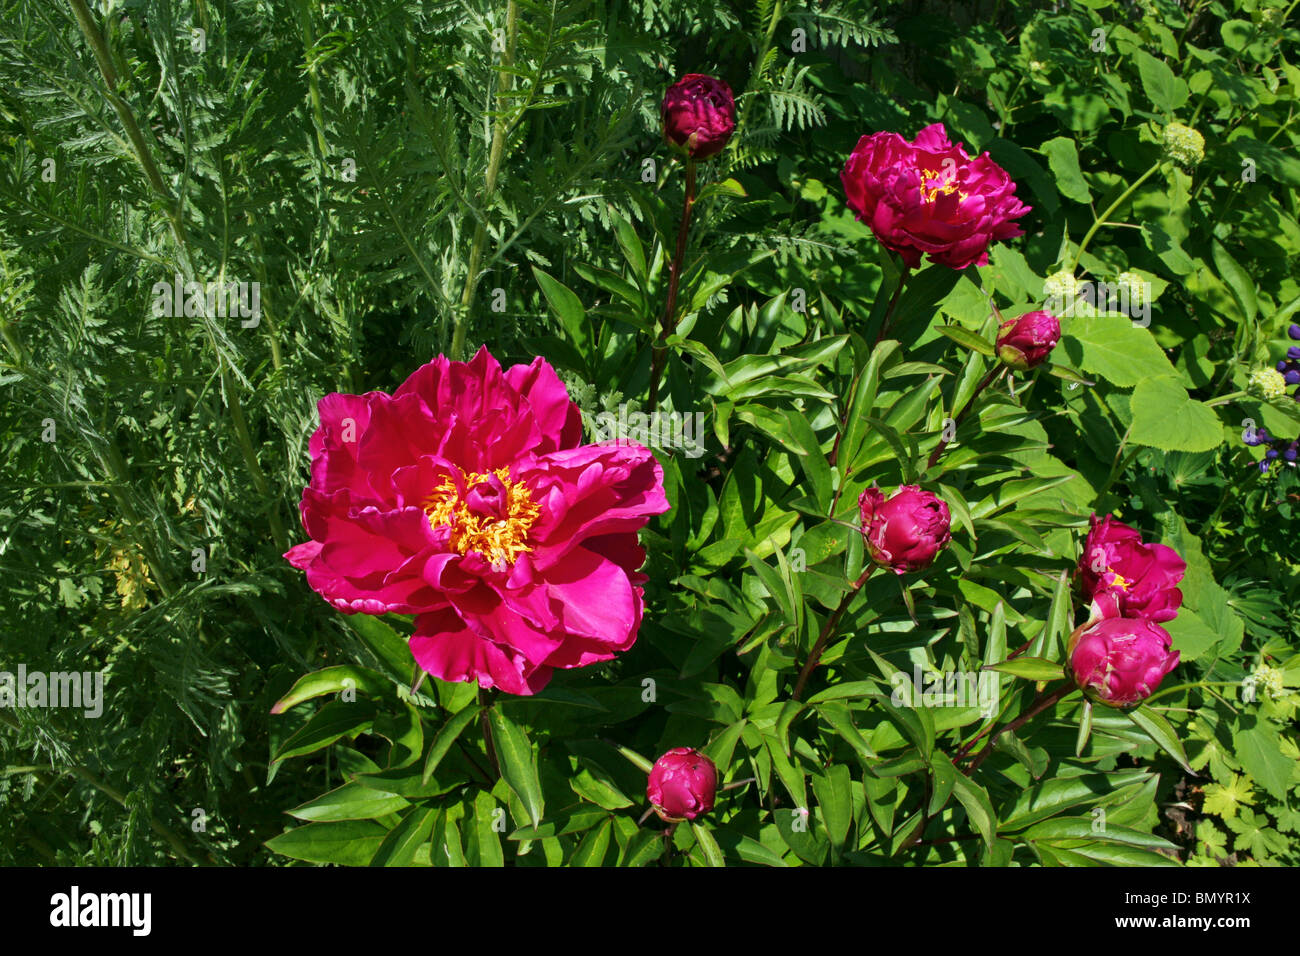 English Country Garden Peony Paeonia Carmine Pink With Yellow Centre Stock Photo Alamy